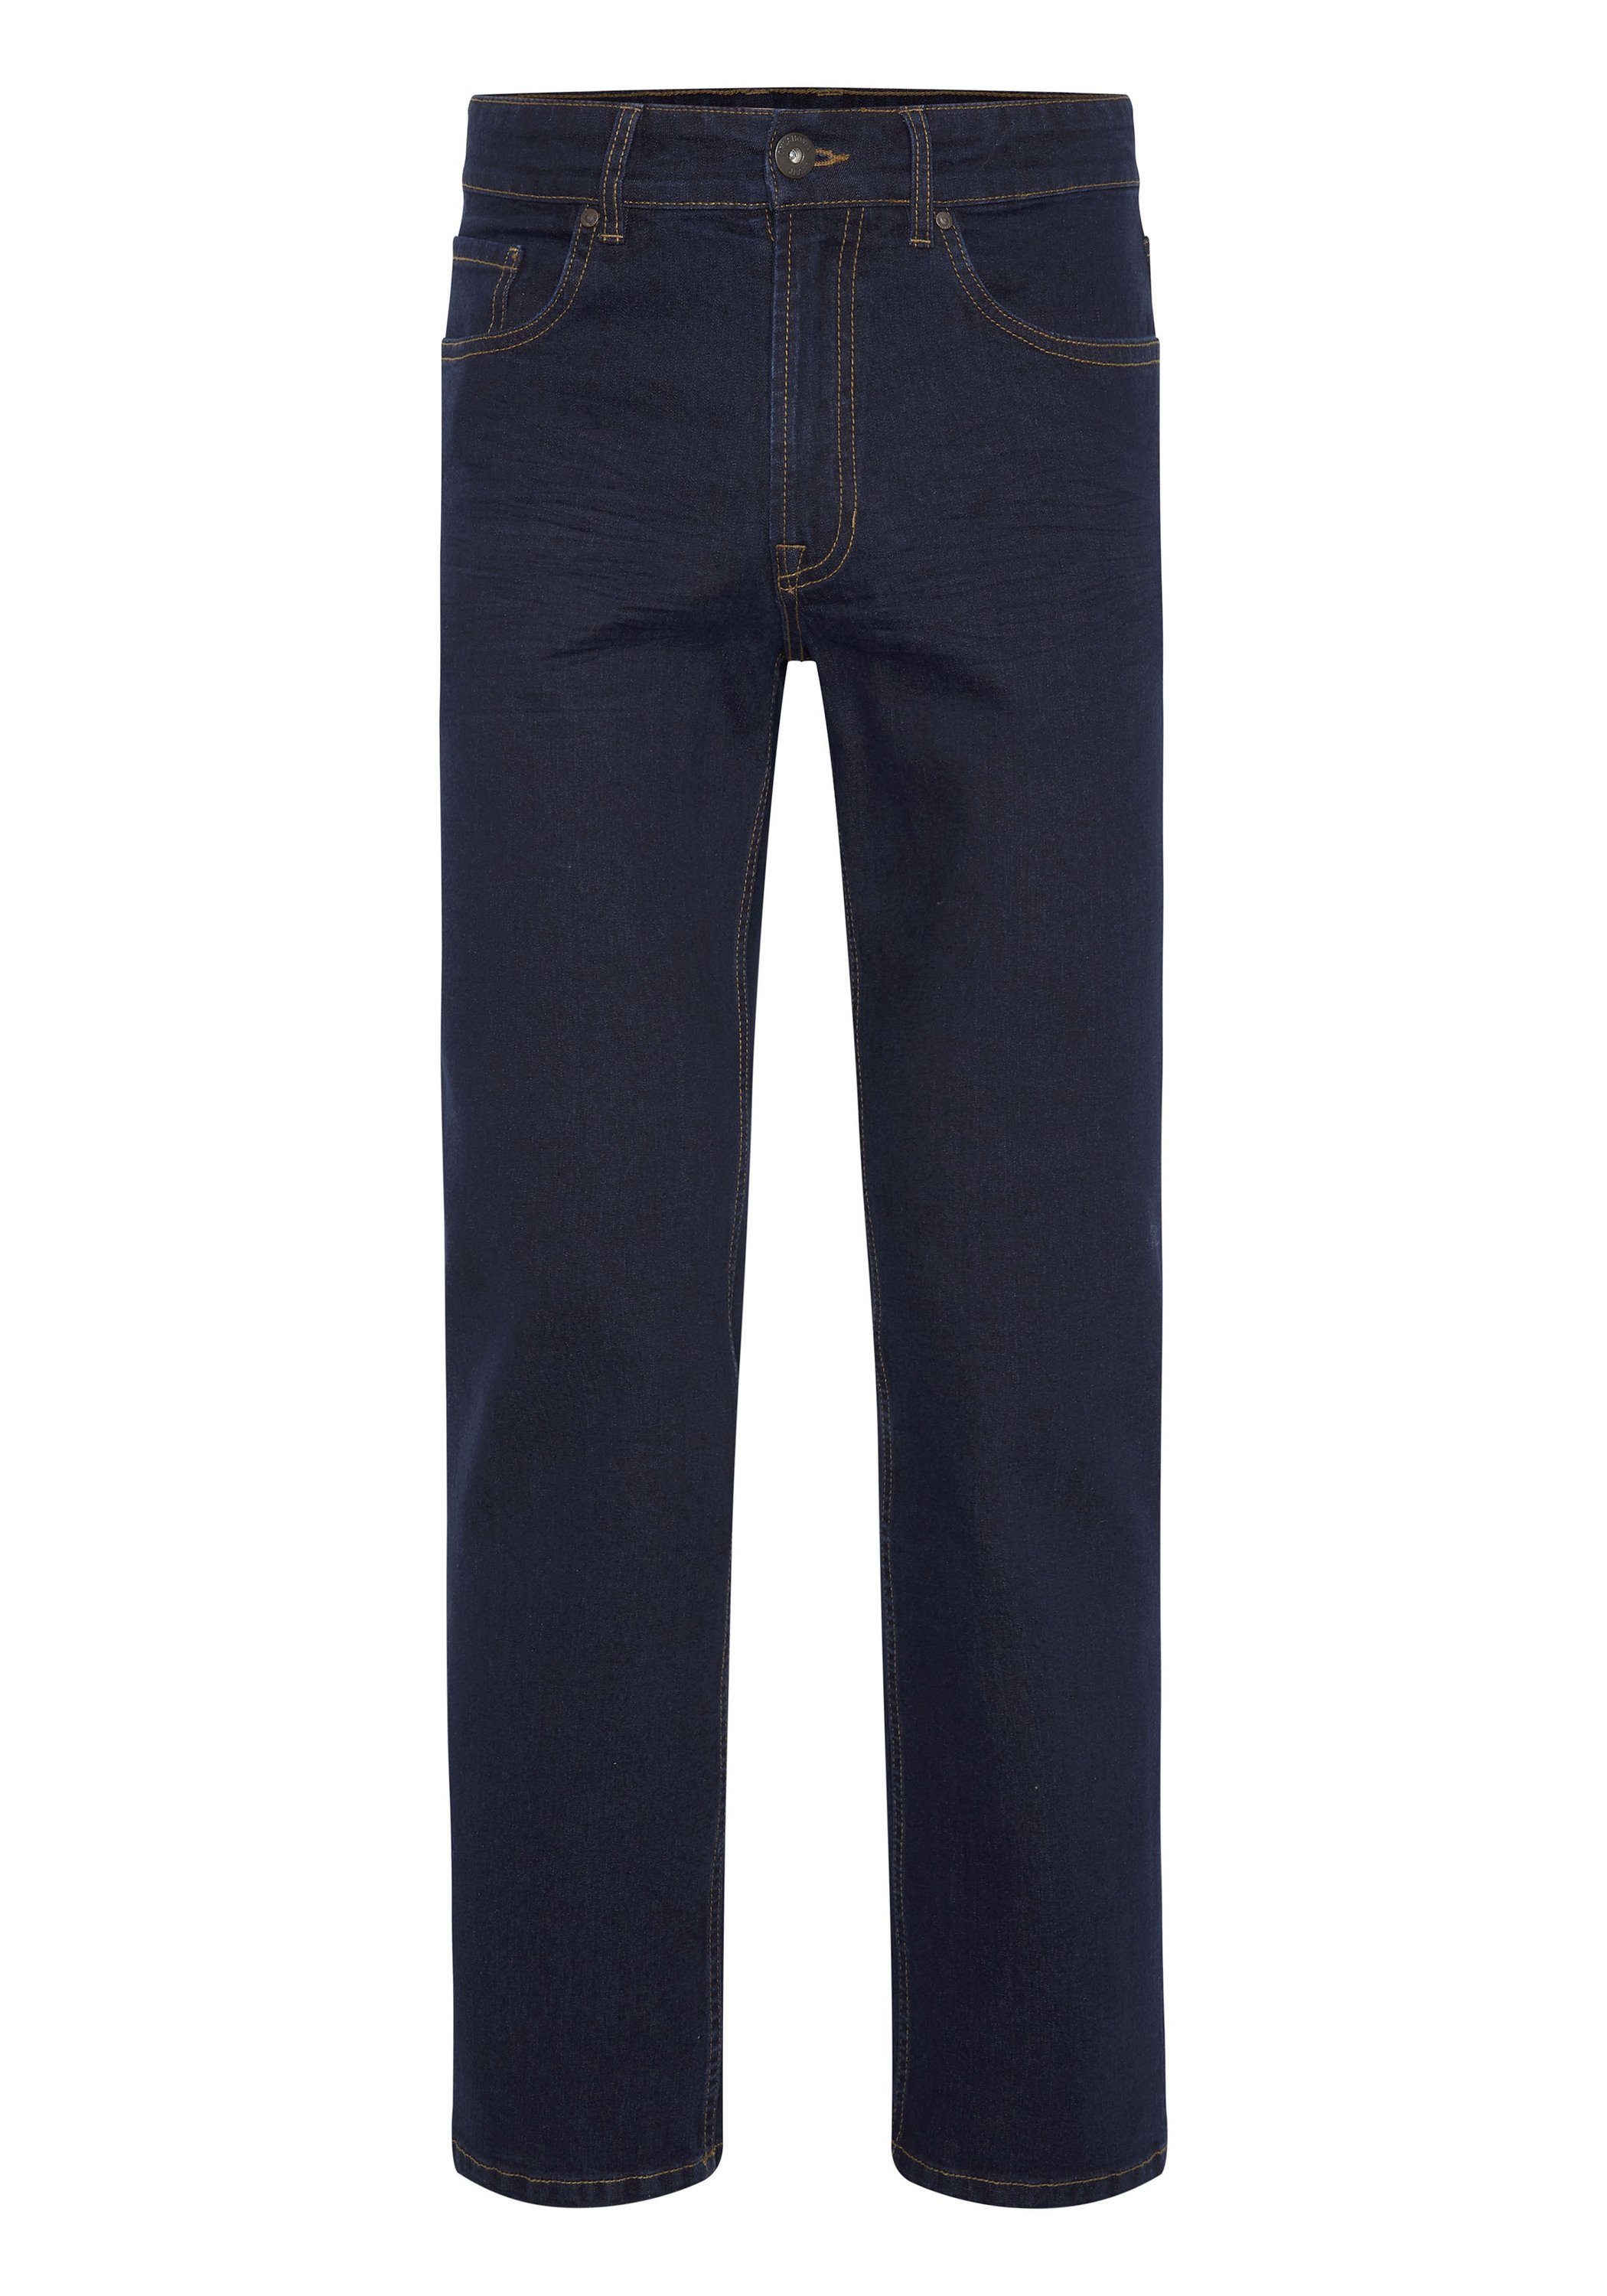 Oklahoma Jeans 5-Pocket-Jeans aus stretchigem Baumwollmix | Slim-Fit Jeans